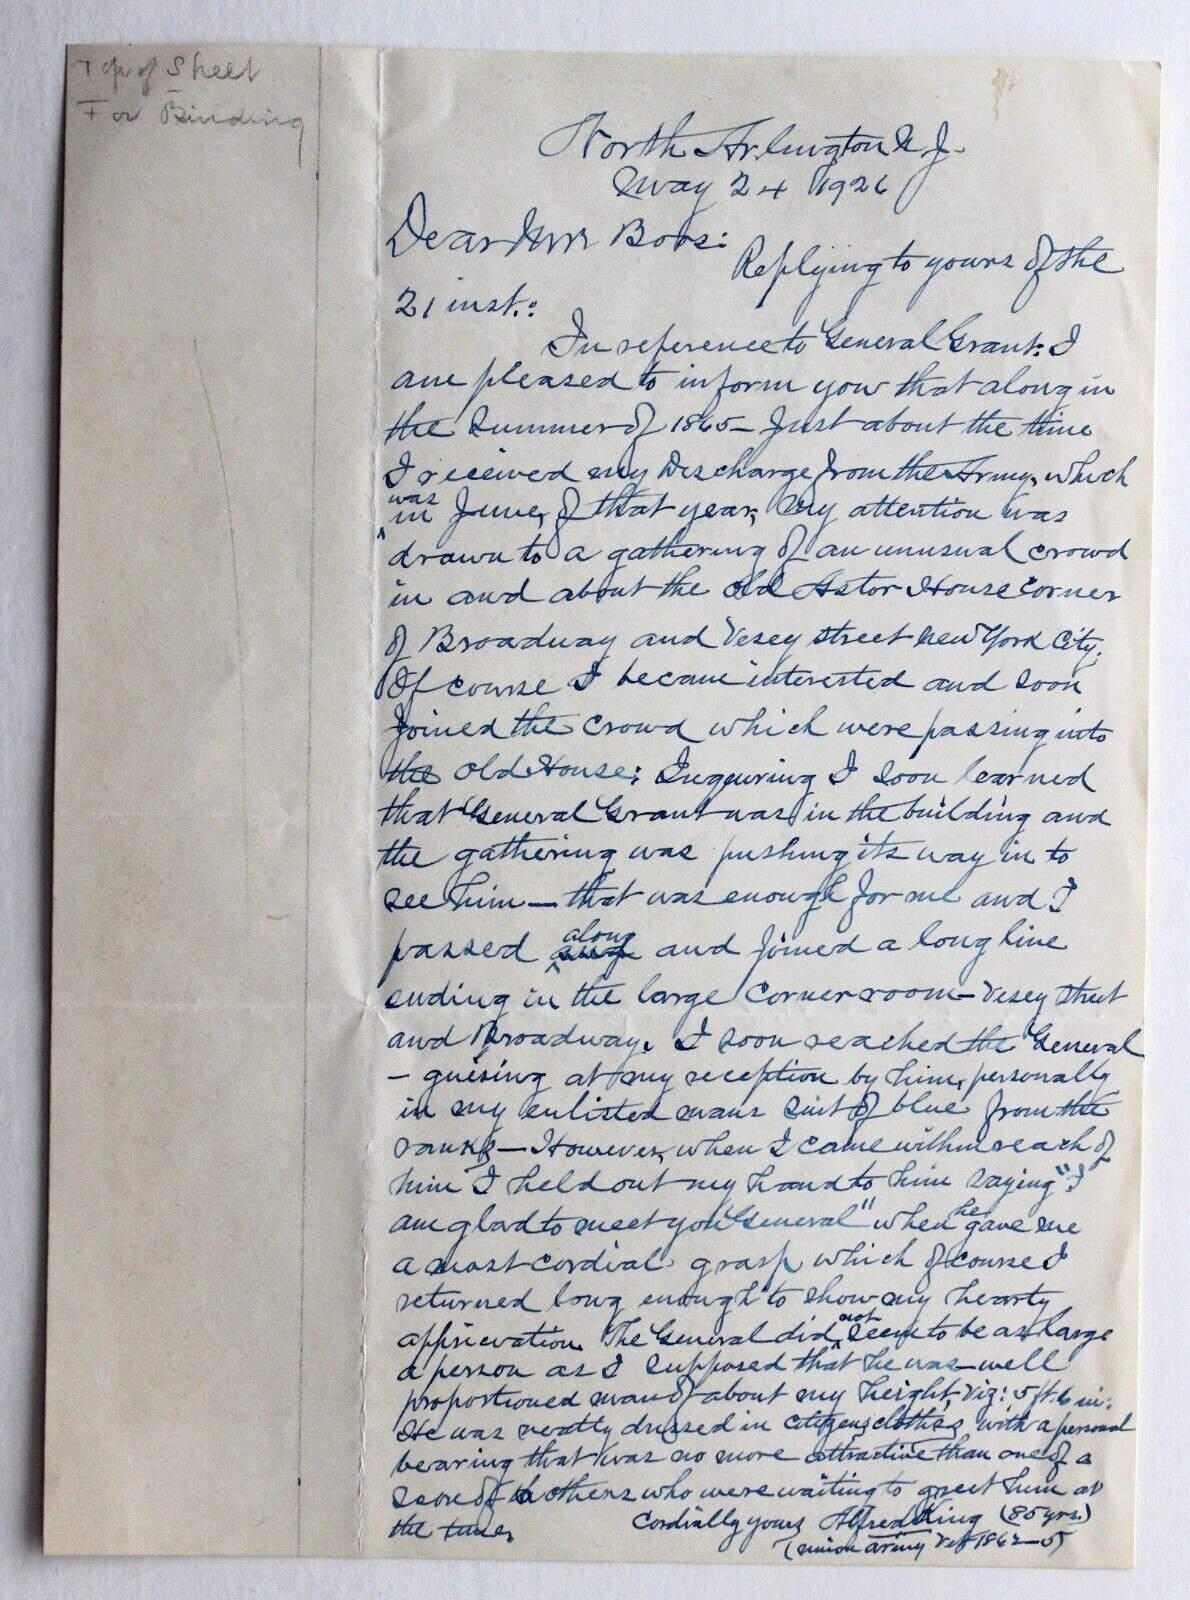 1926 Letter from Civil War Veteran to John Boos re Meeting Gen. Grant in NYC